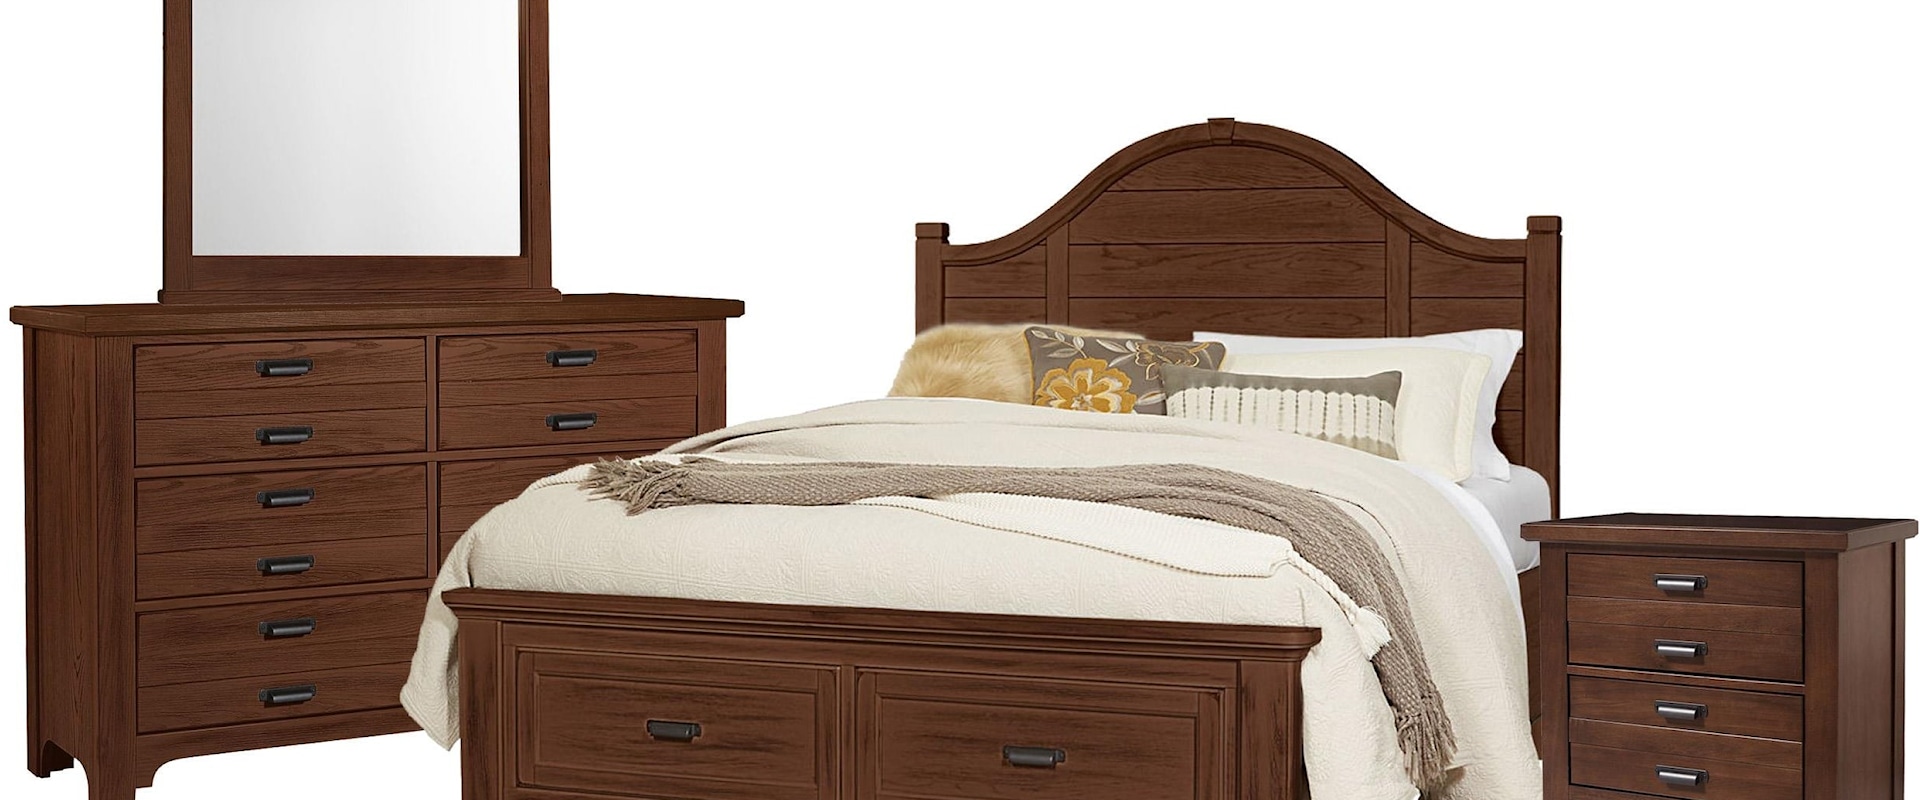 Queen Arch Bed, Double Dresser, Landscape Mirror, 2 Drawer Nightstand